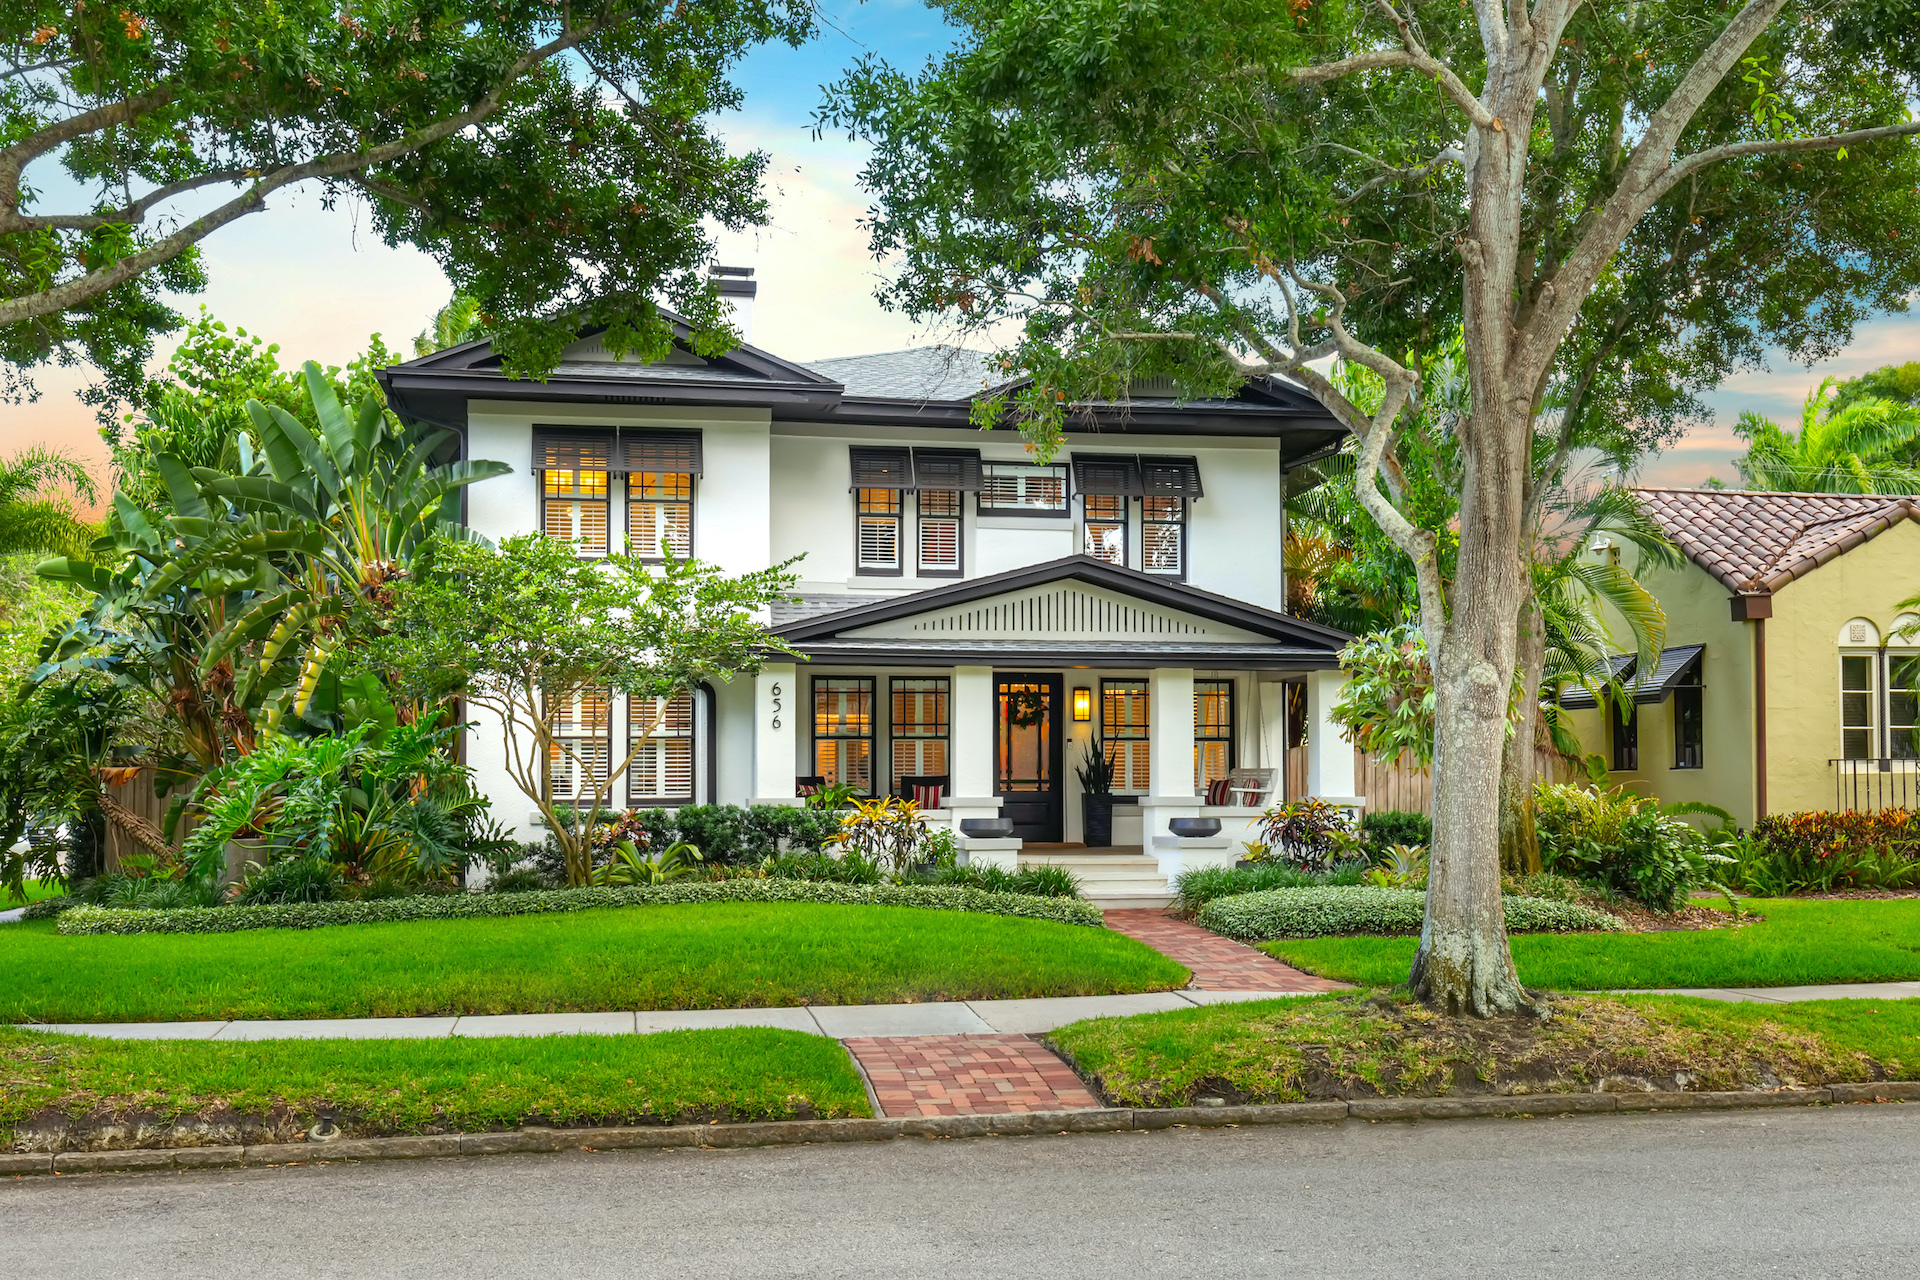 Barbara Izzi | Smith & Associates Real Estate | REALTOR | Home